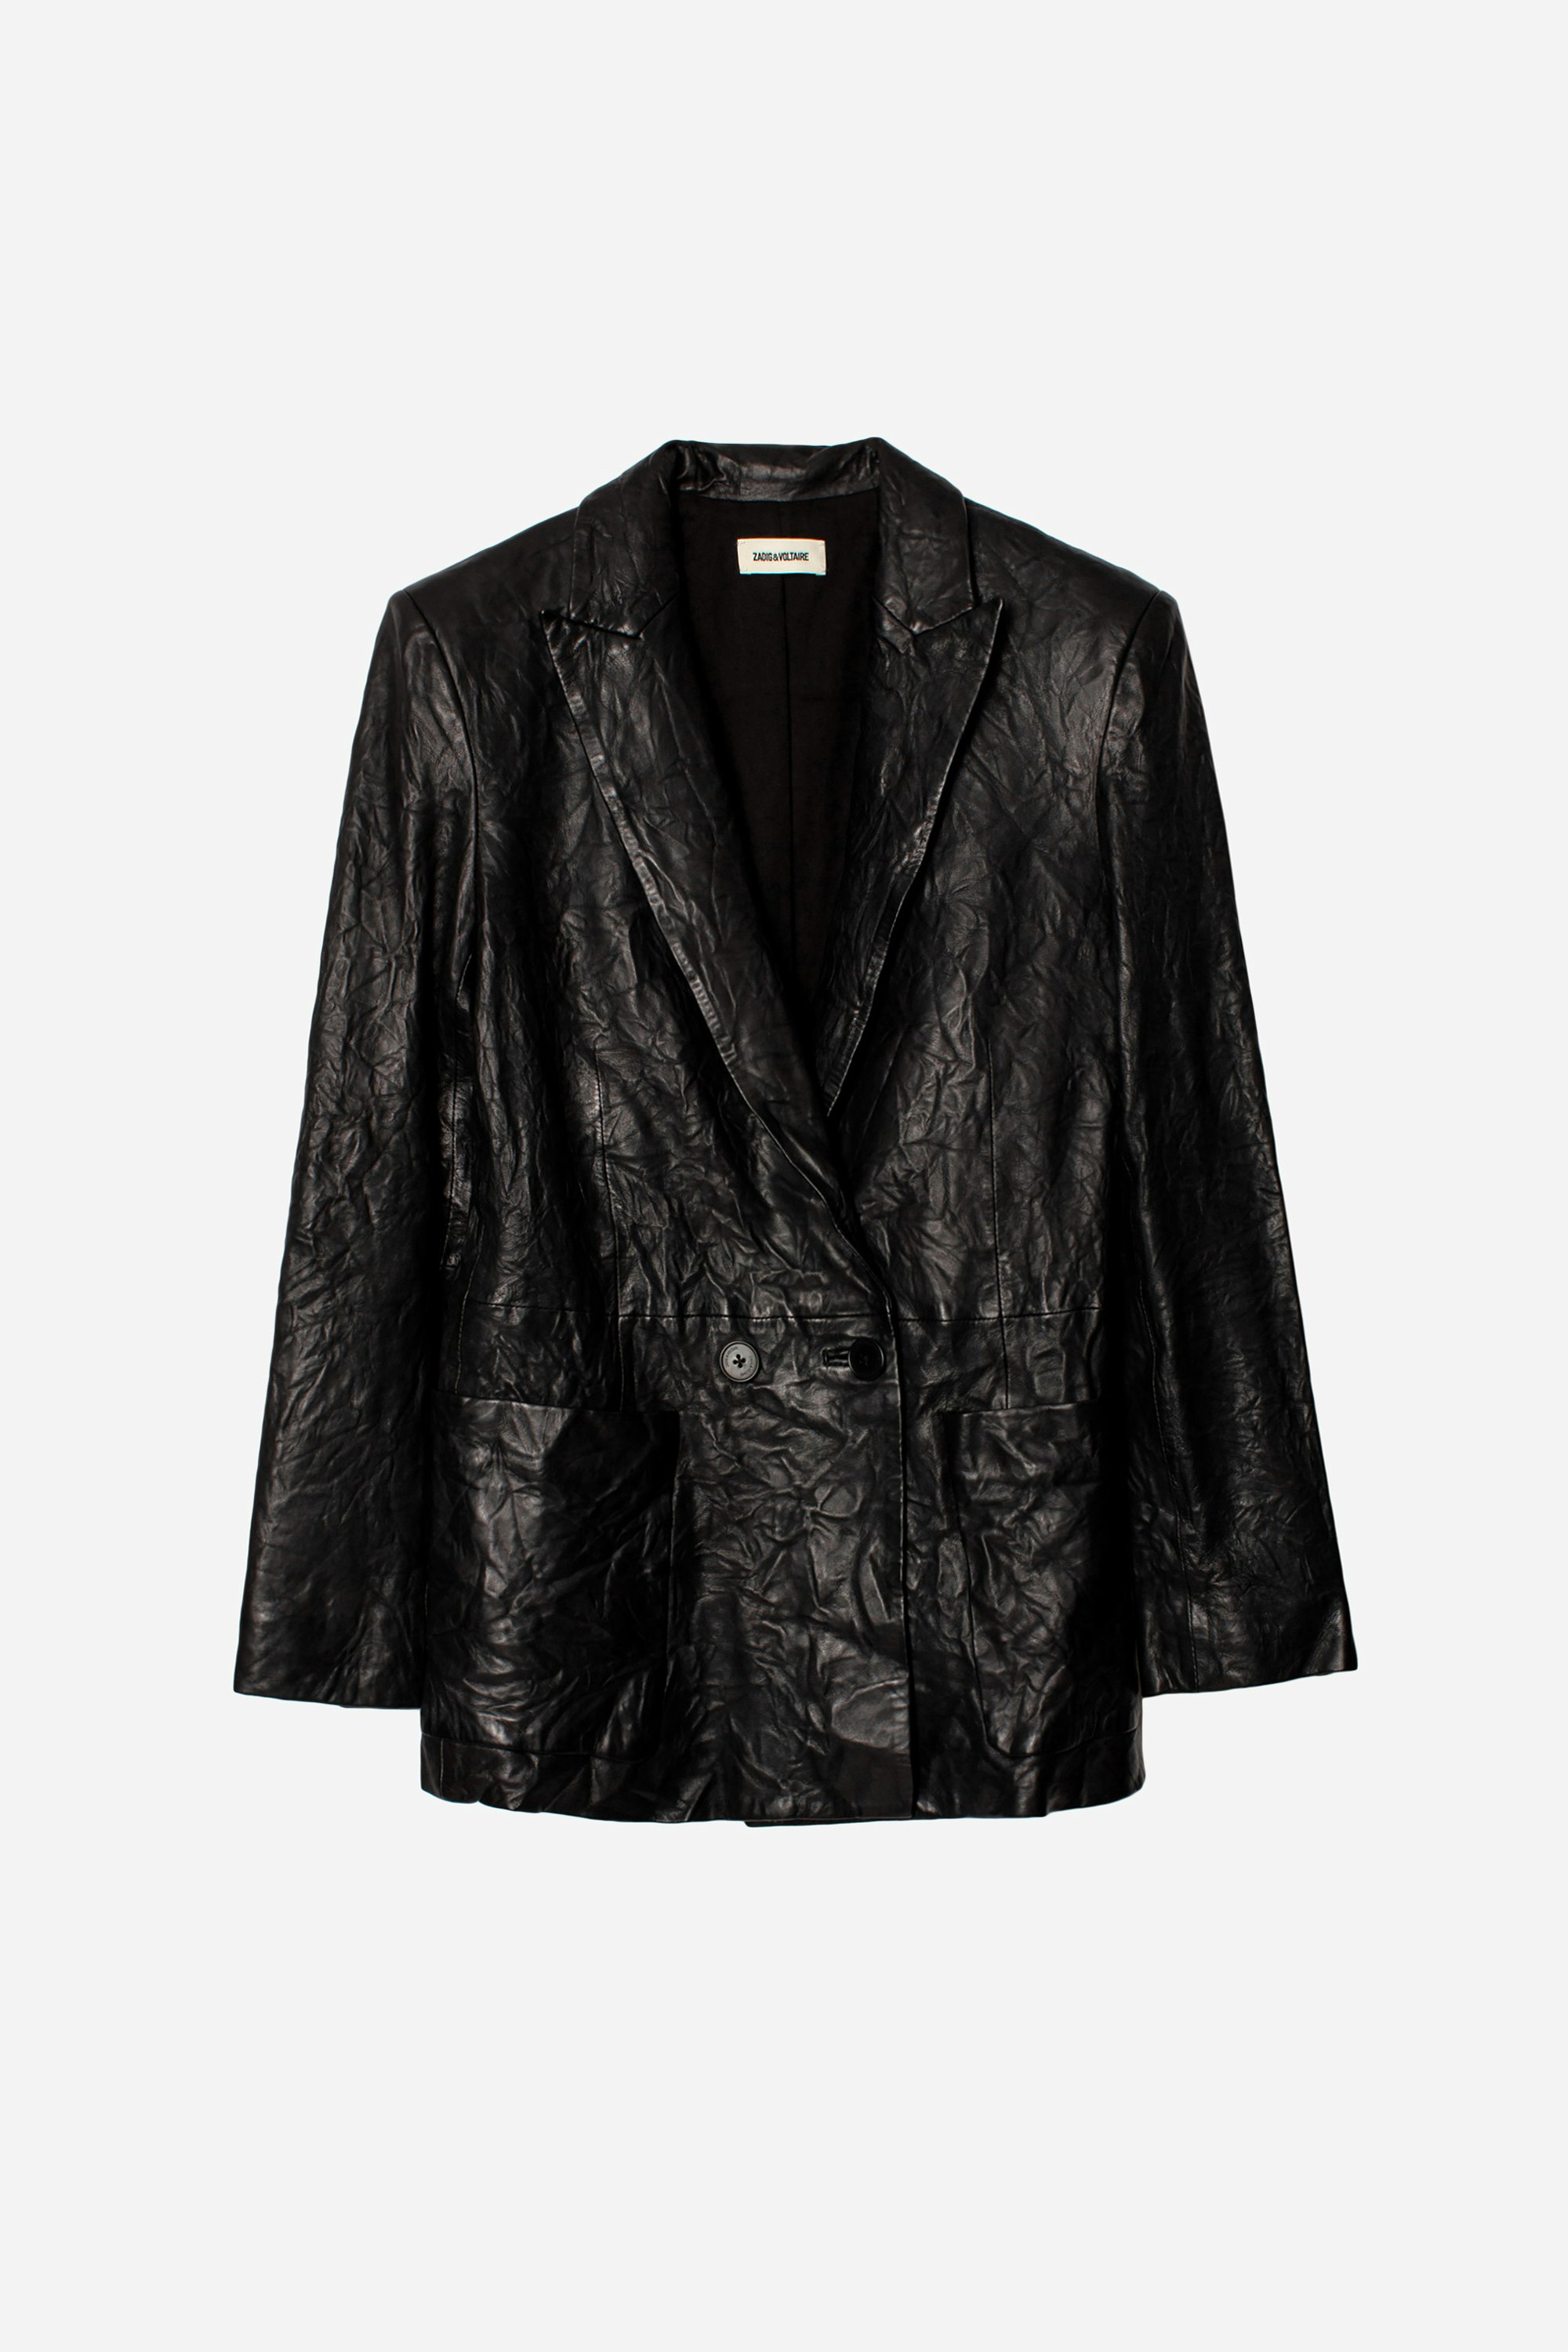 Visco Crinkled Leather Jacket - Women's black crinkled-effect leather jacket.